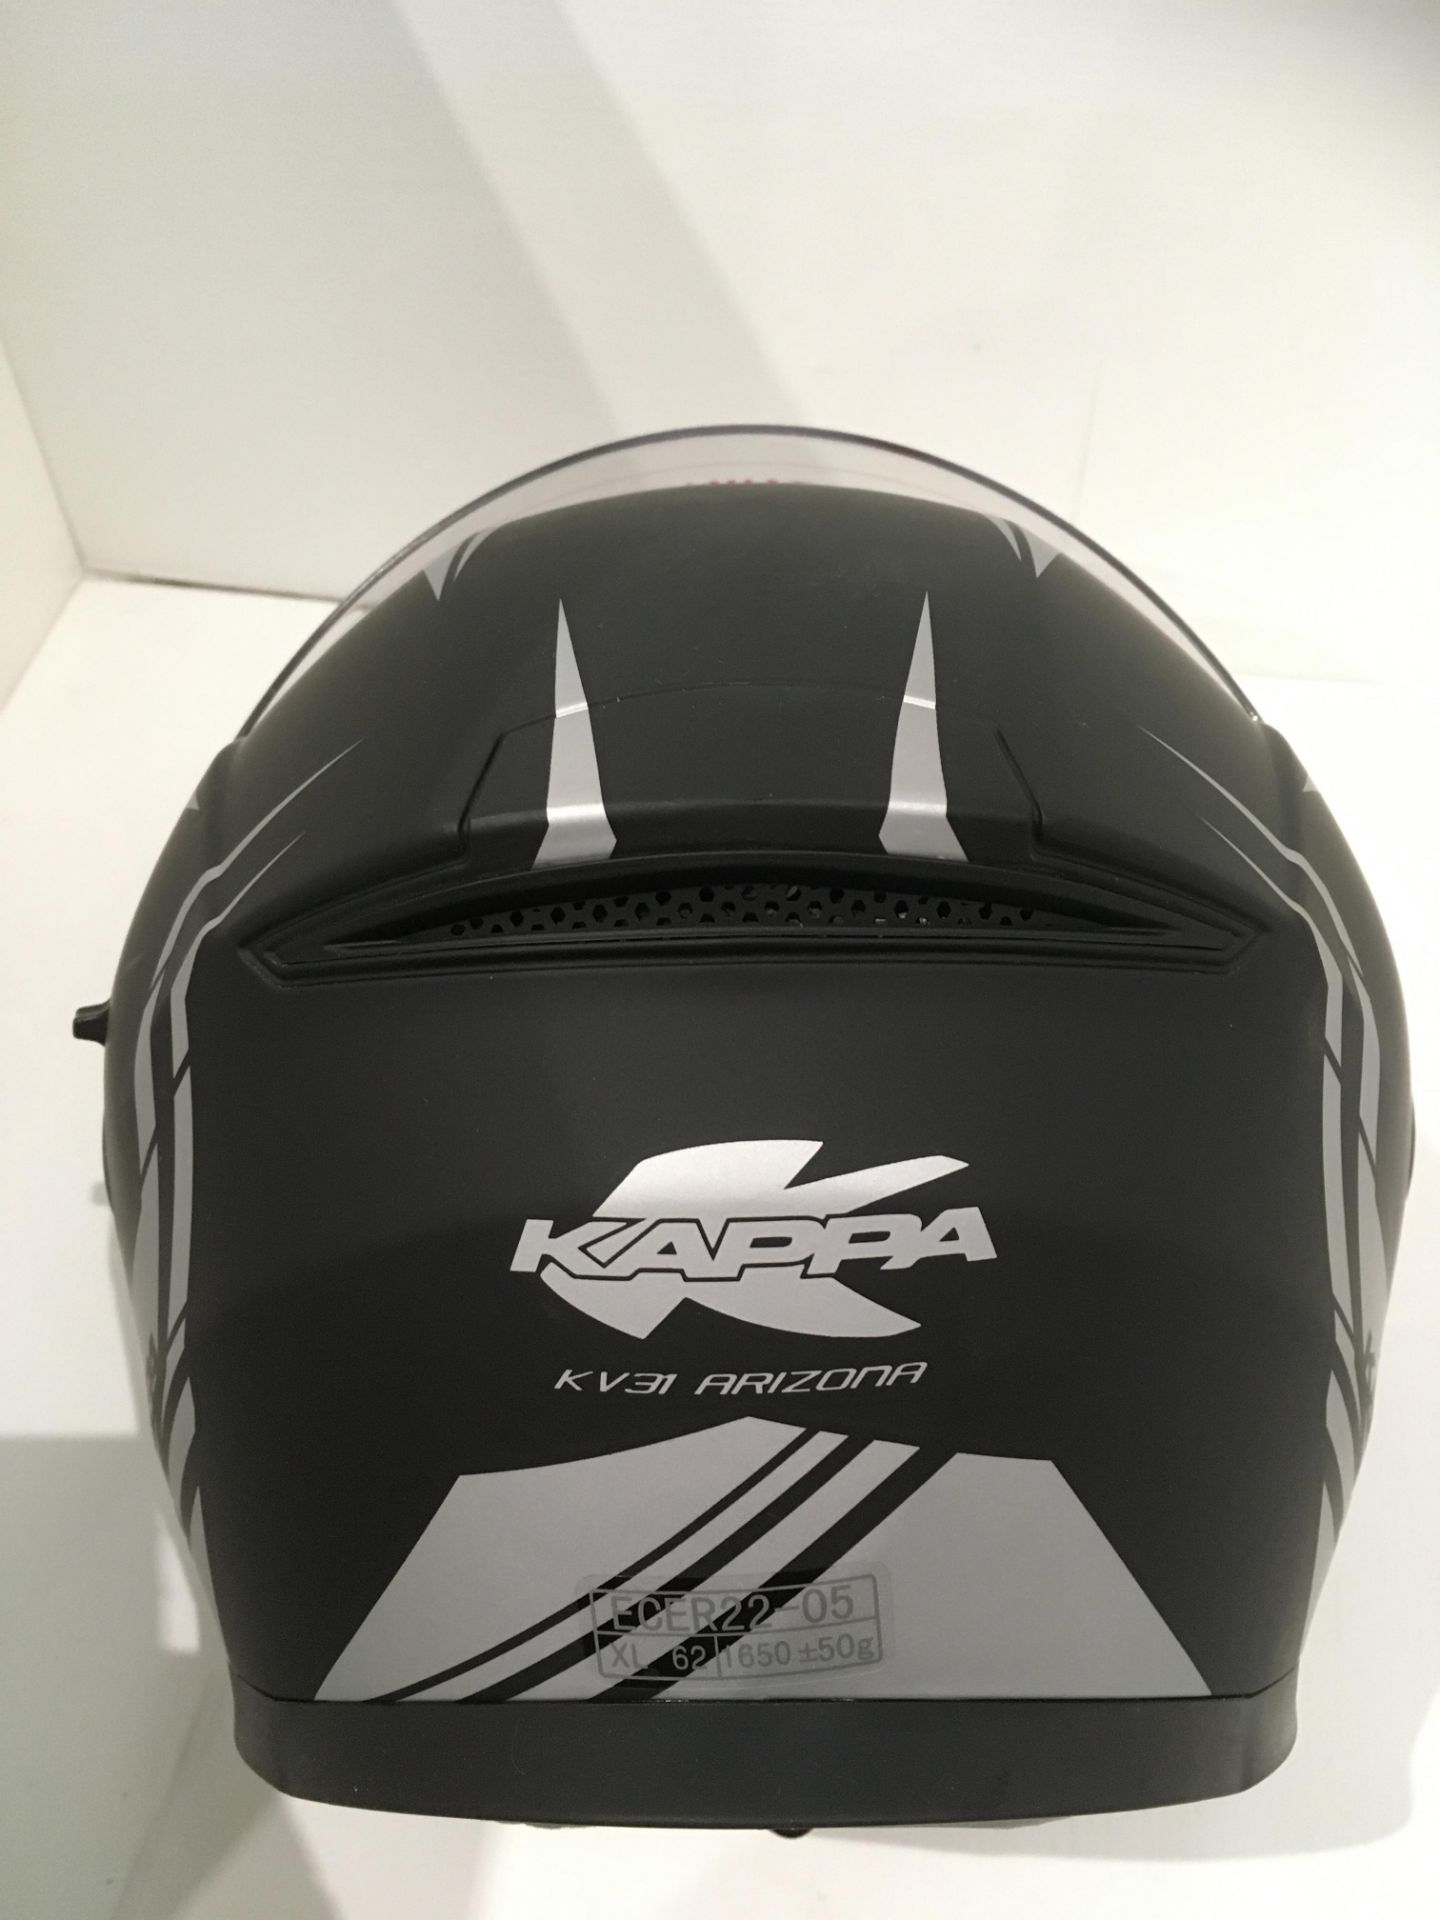 Kappa KV31 Arizona motorbike helmet with flip up aerodynamic shell in matt black/silver - size XL - Image 5 of 5